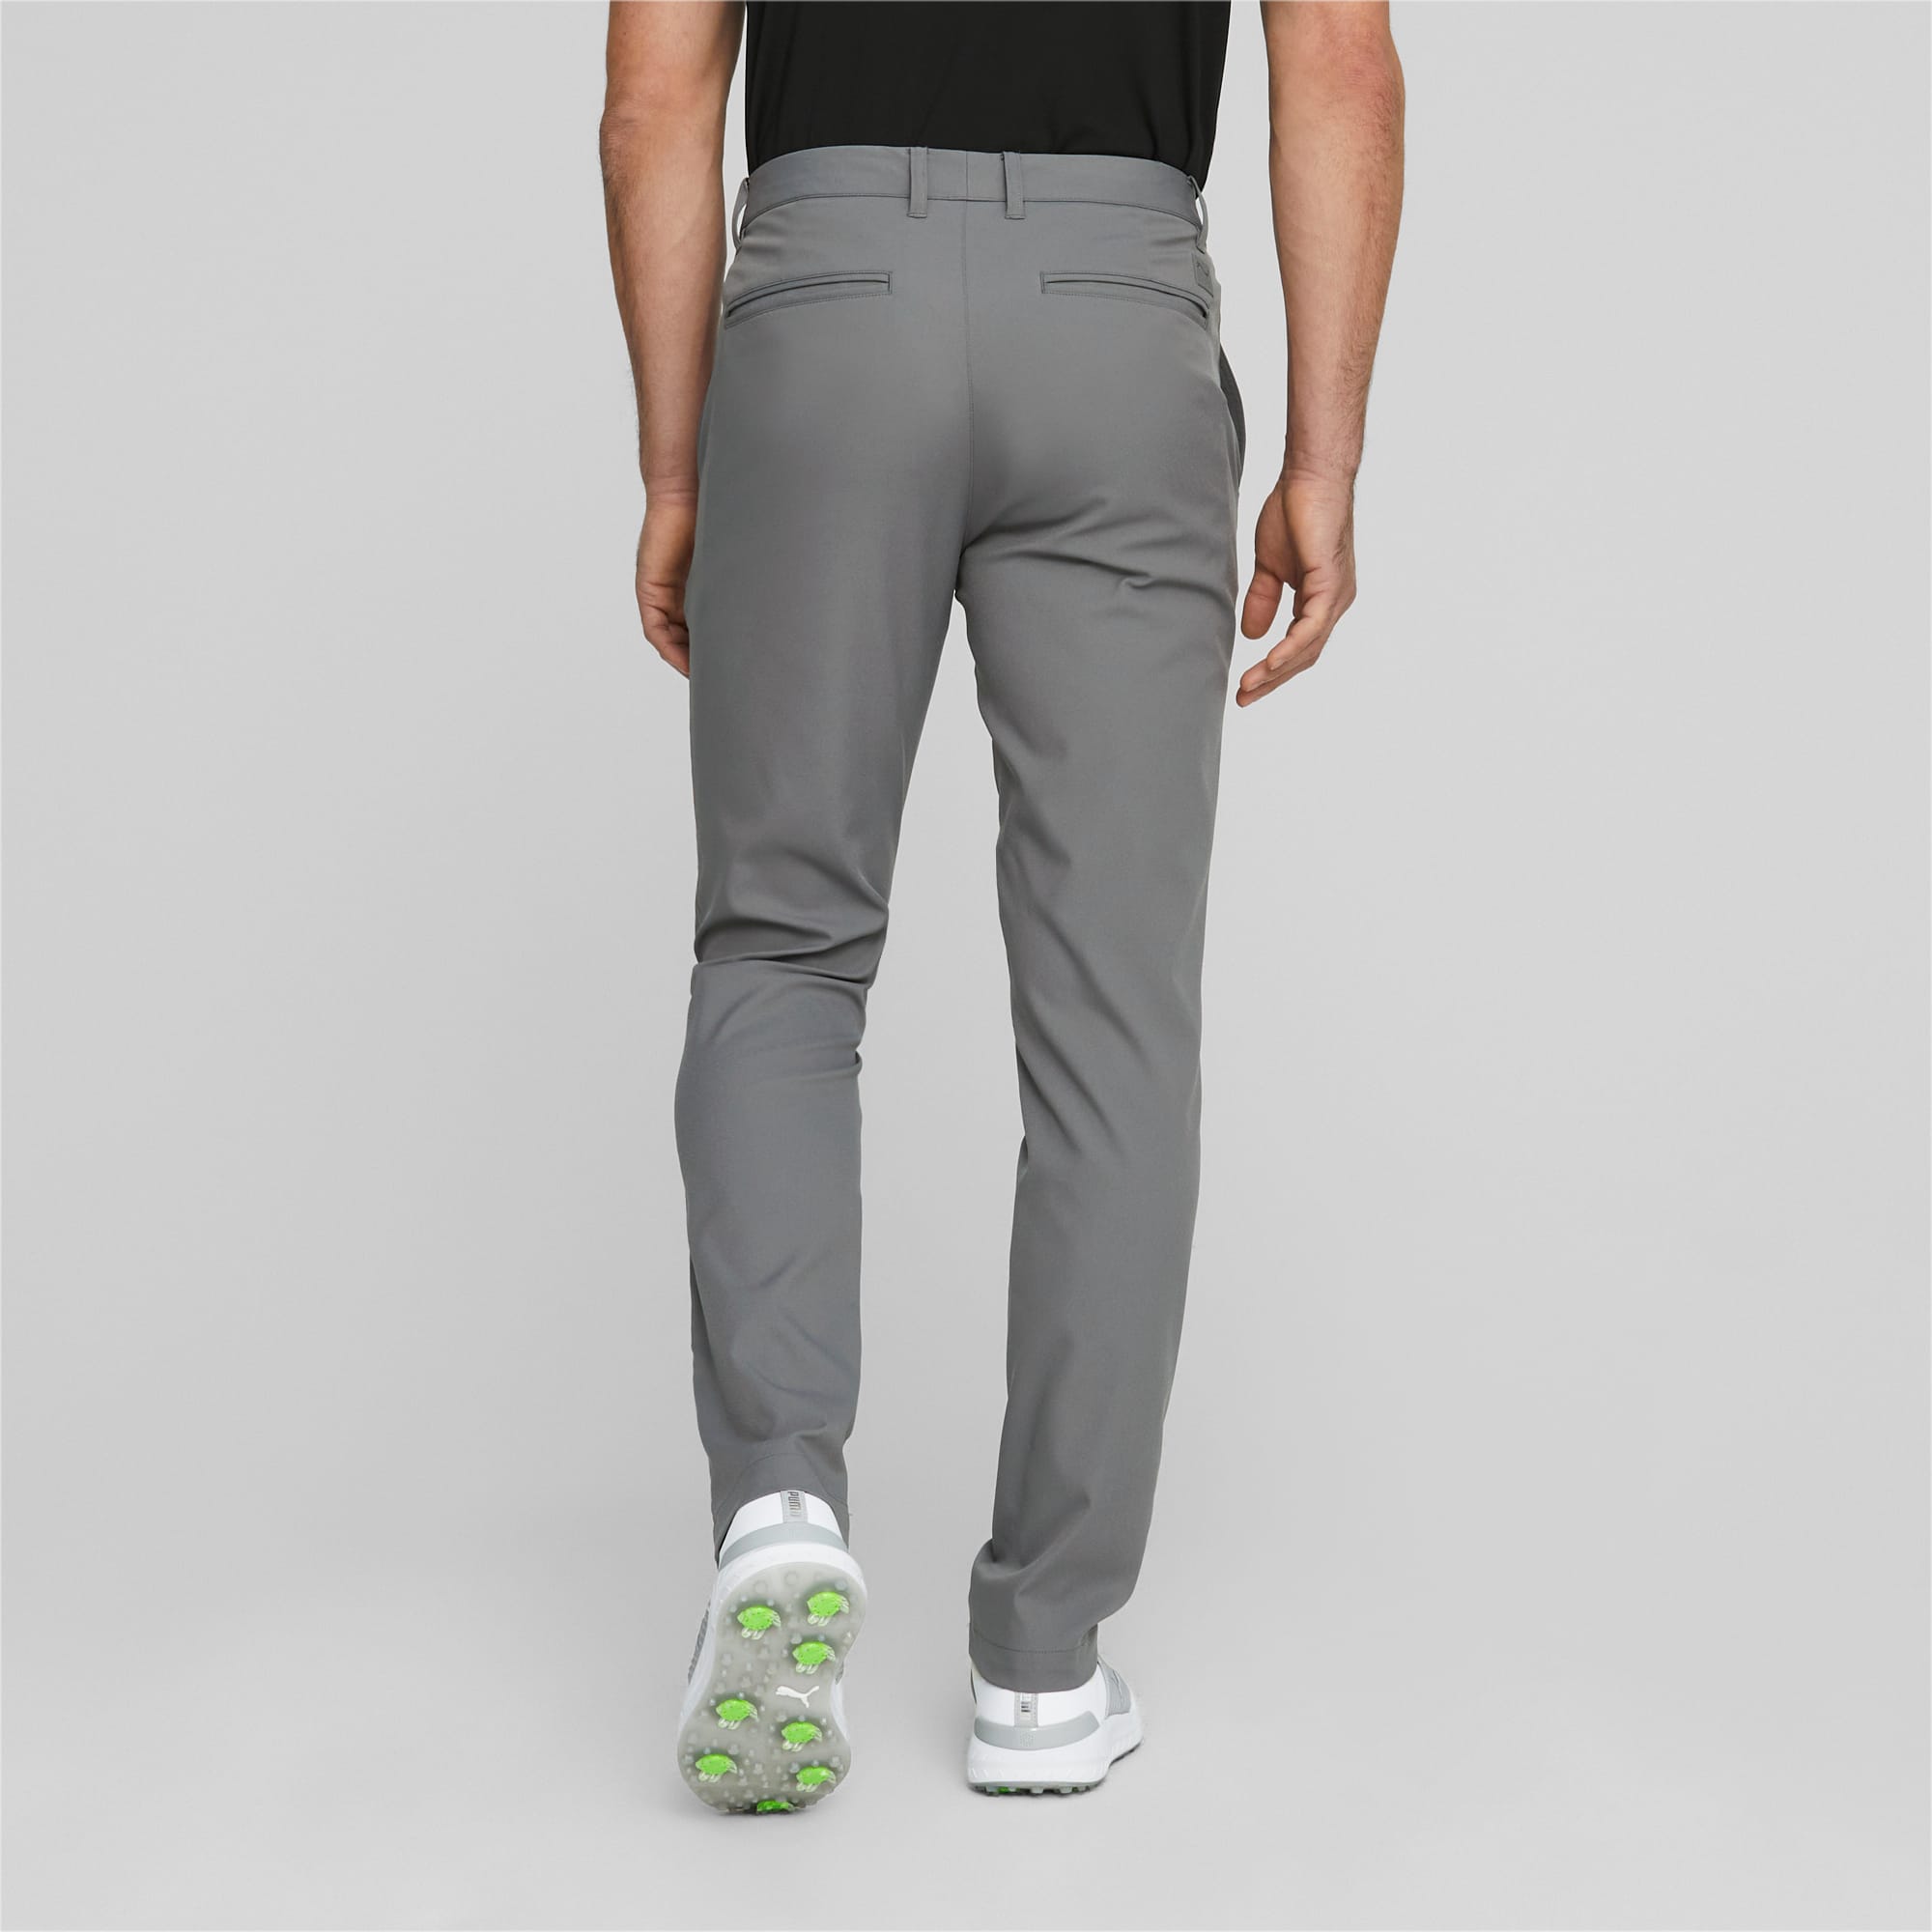 PUMA Dealer Tailored Golf Pants Men, Slate Sky, Size 35/34, Clothing